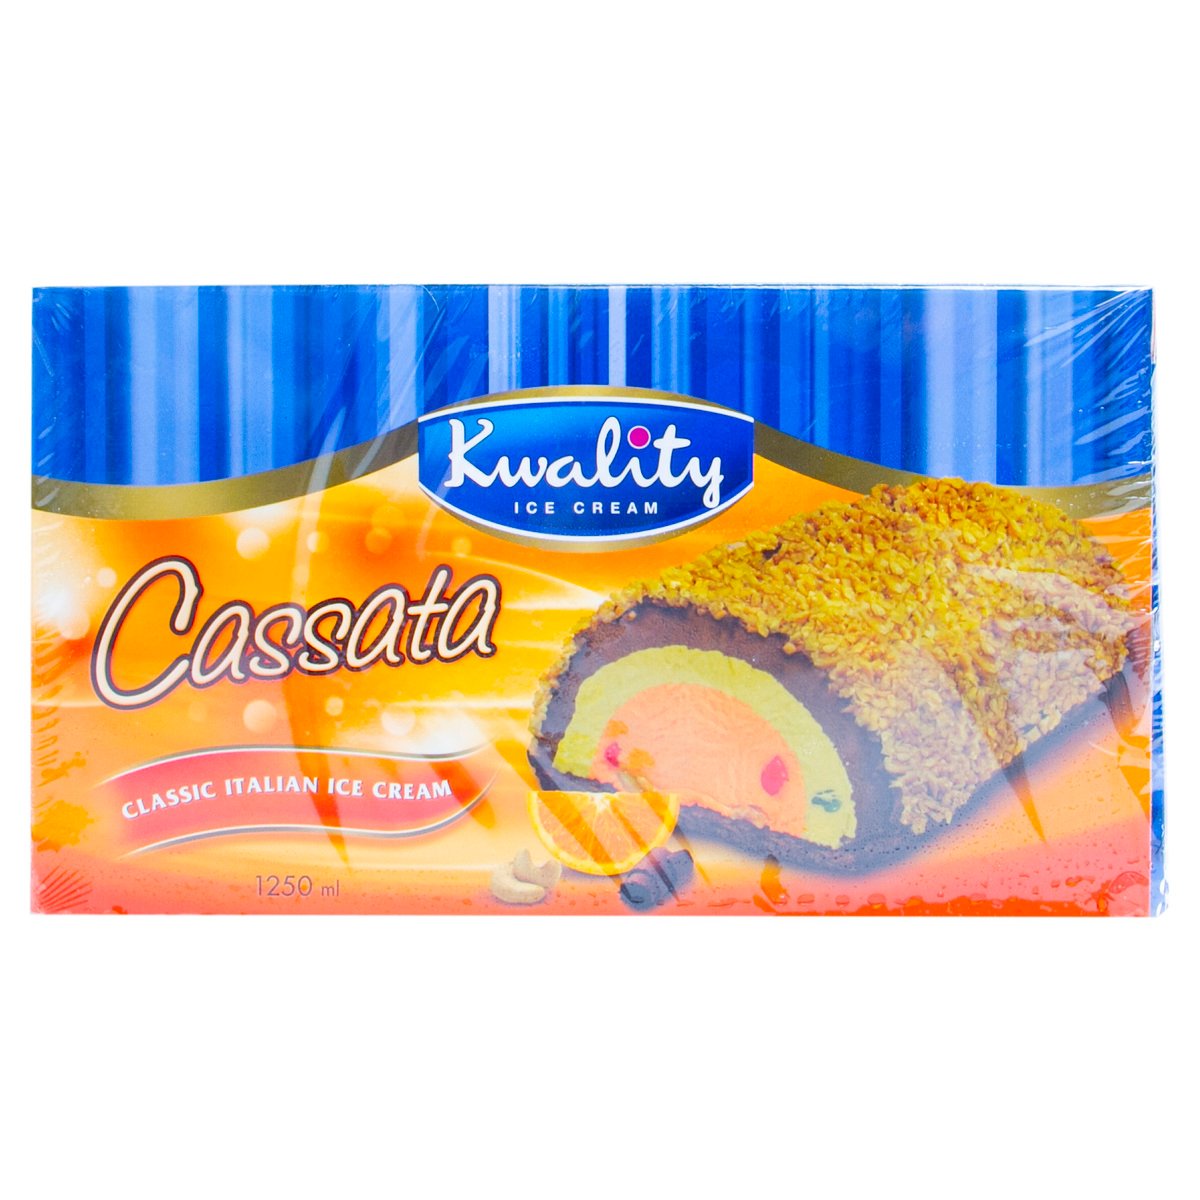 Kwality Cassata Ice Cream 1.25 Litre